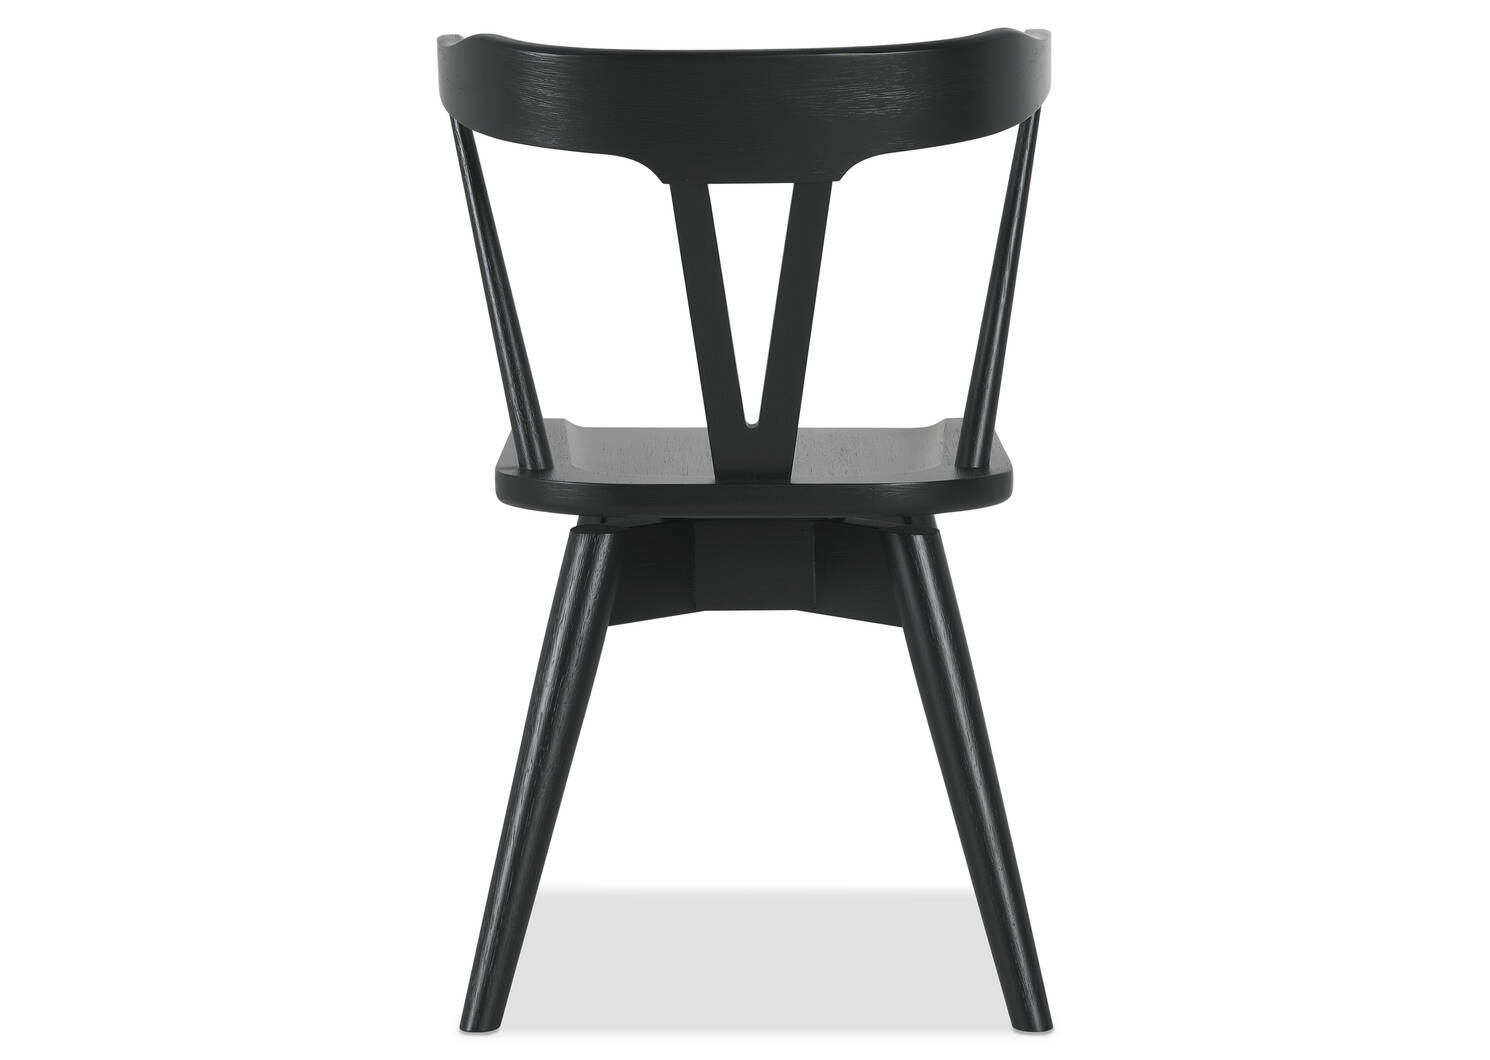 Chaise pivotante Tolbert -Mesa noir